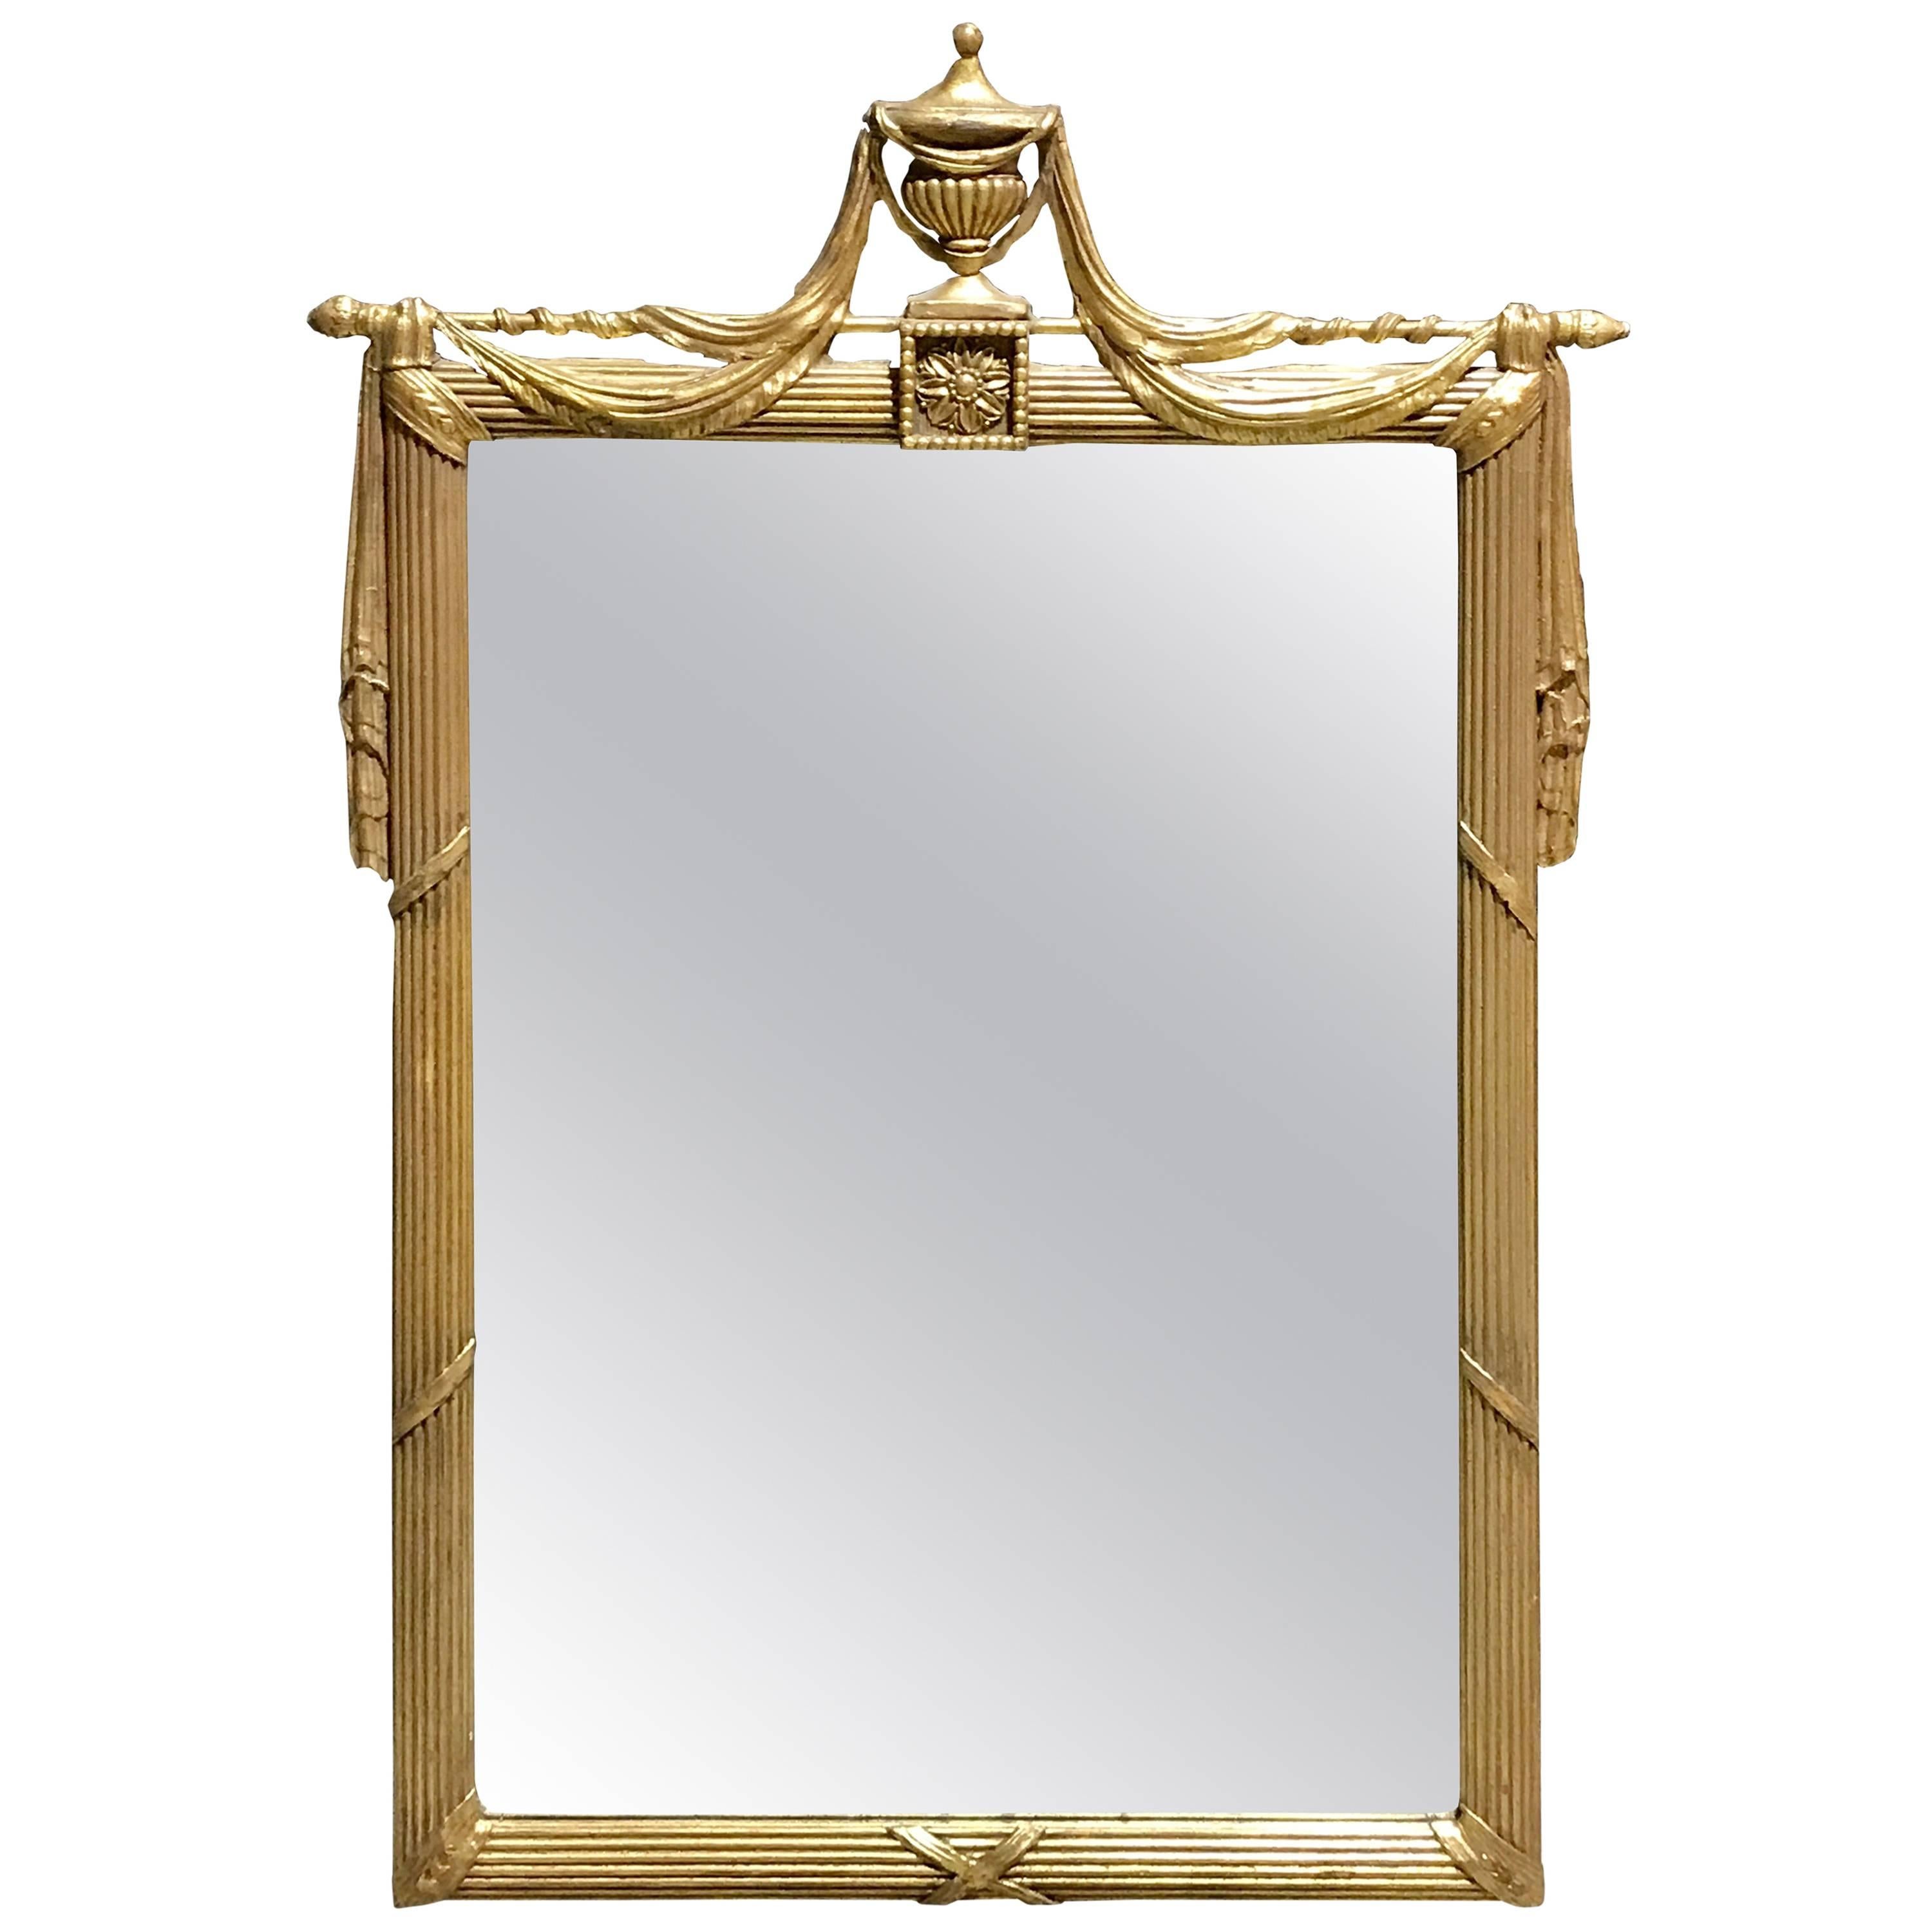 Giltwood Neoclassical Draped Mirror